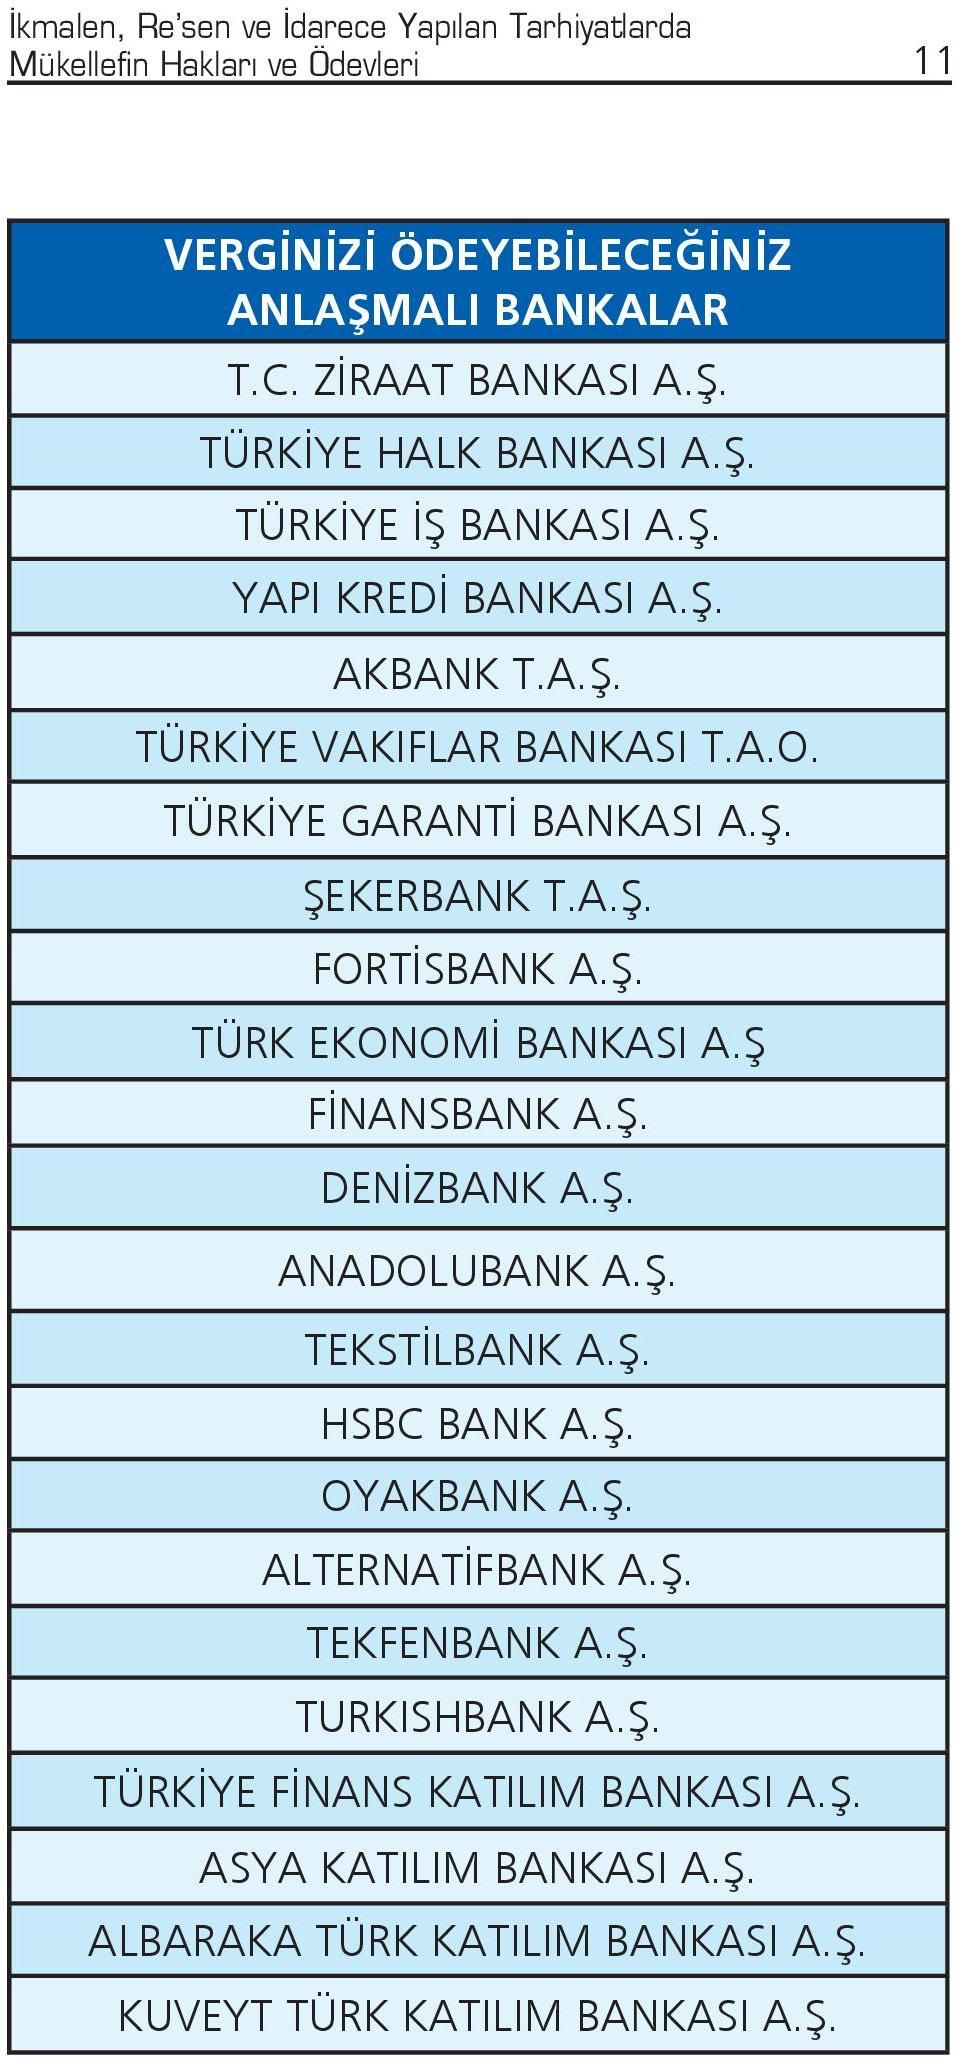 Ş FİNANSBANK A.Ş. DENİZBANK A.Ş. ANADOLUBANK A.Ş. TEKSTİLBANK A.Ş. HSBC BANK A.Ş. OYAKBANK A.Ş. ALTERNATİFBANK A.Ş. TEKFENBANK A.Ş. TURKISHBANK A.Ş. TÜRKİYE FİNANS KATILIM BANKASI A.